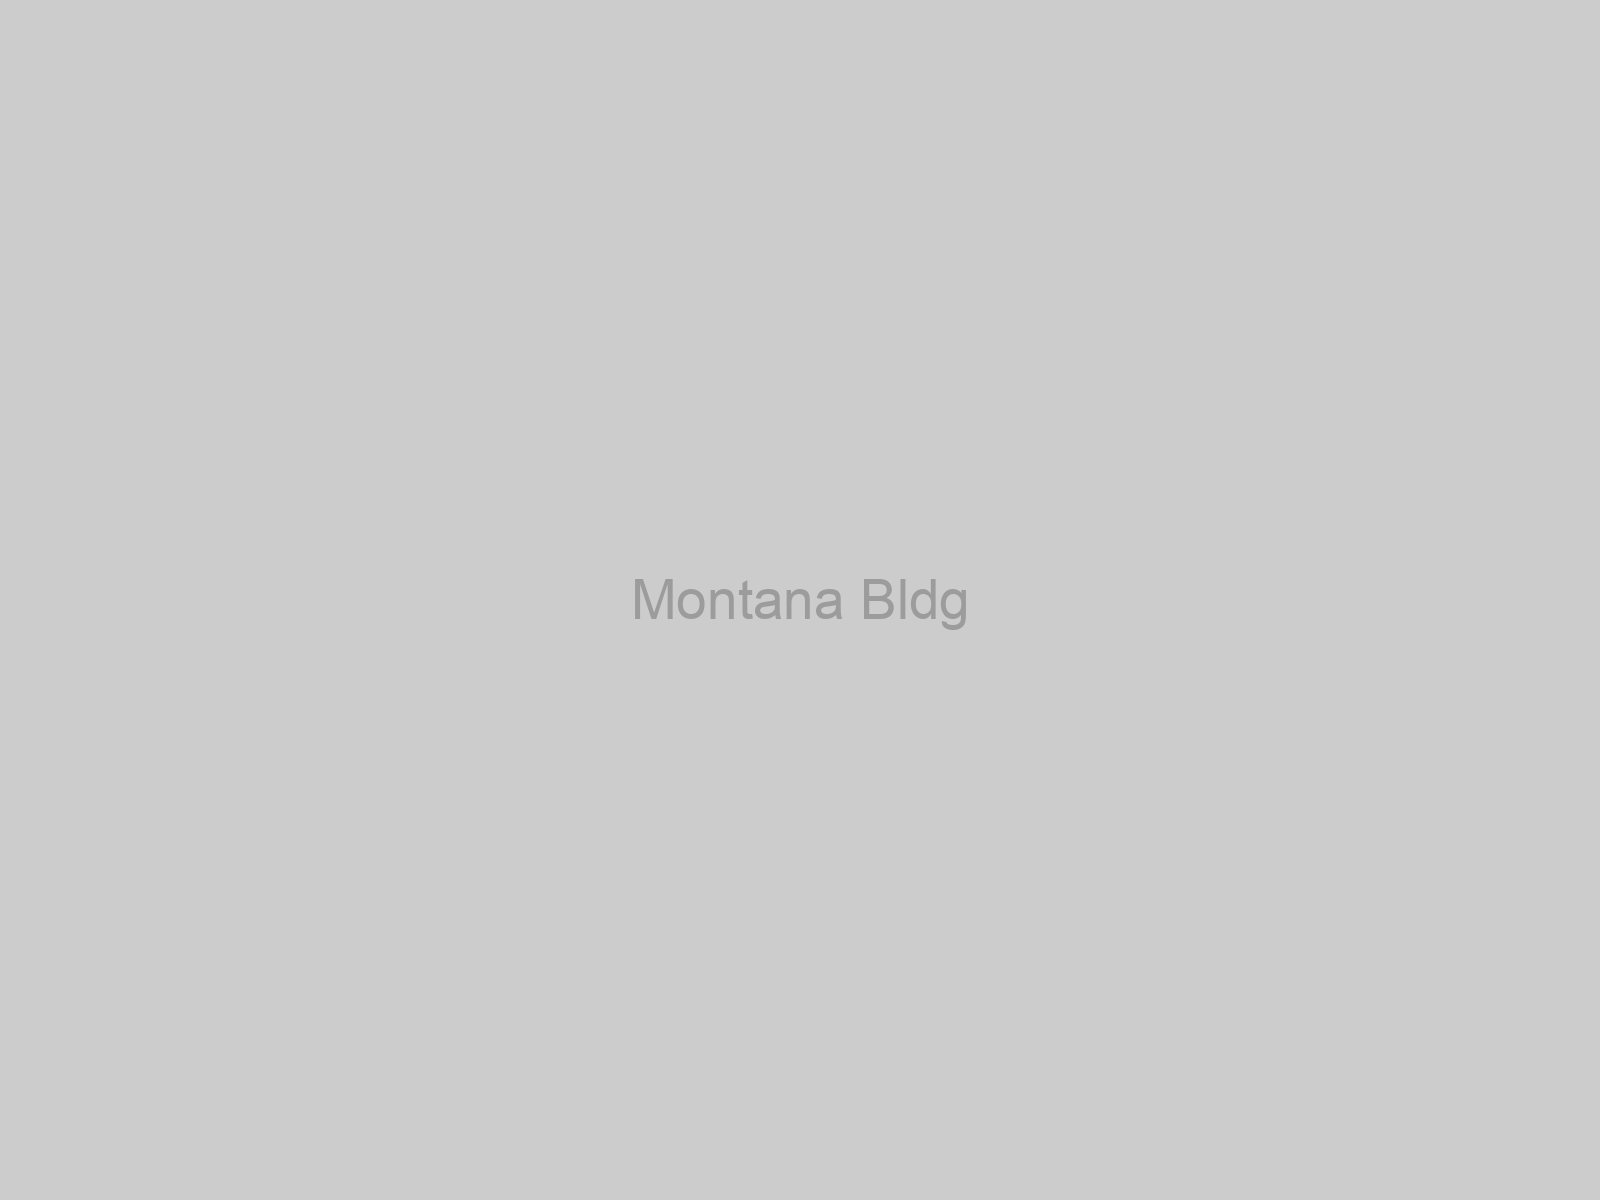 Montana Bldg